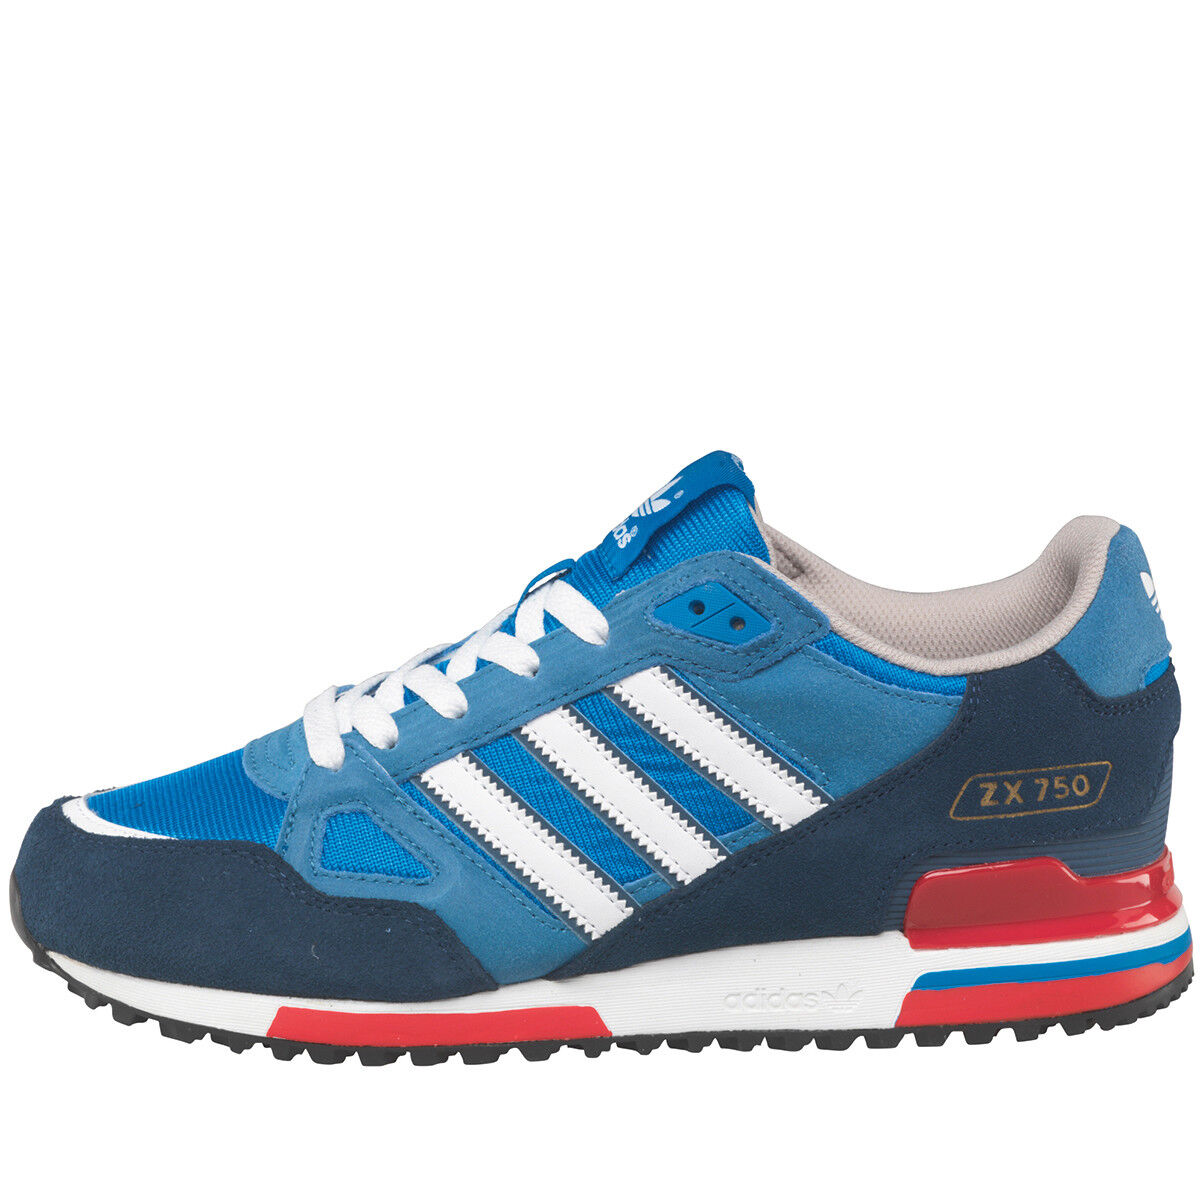 Adidas Original Mens Zx 750 Sneakers Bluebird/Blue/Navy/Red/White 